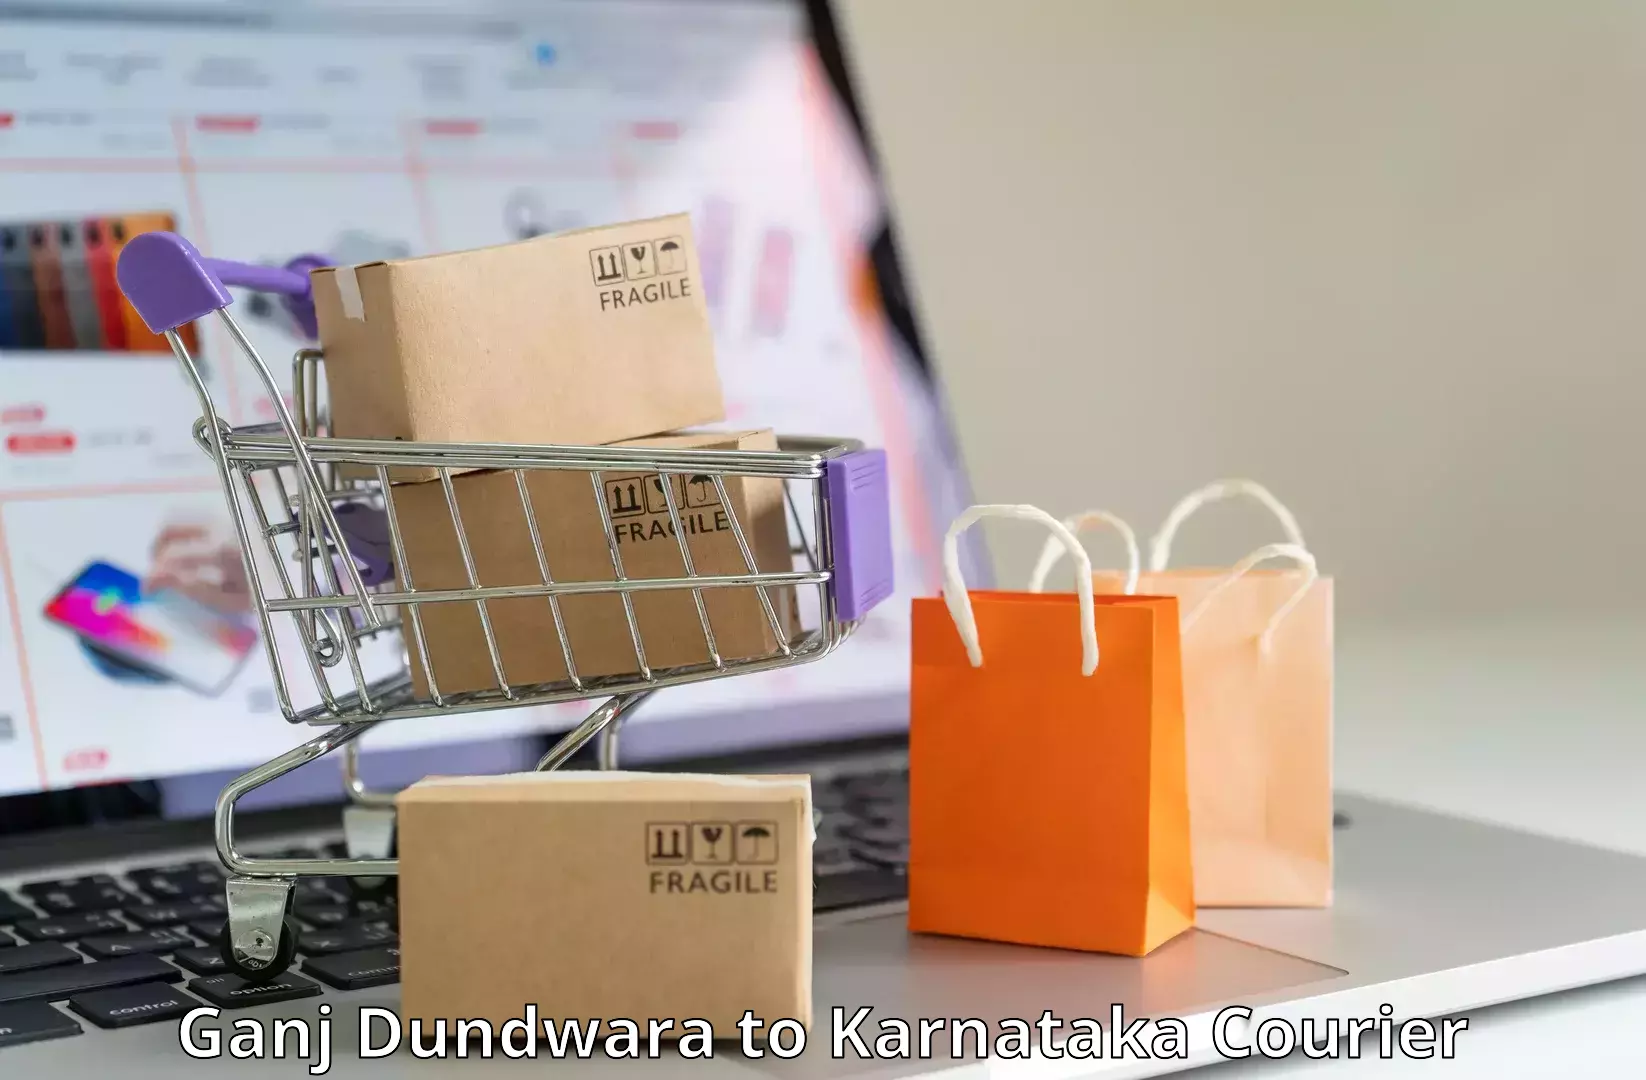 Business delivery service Ganj Dundwara to Karnataka